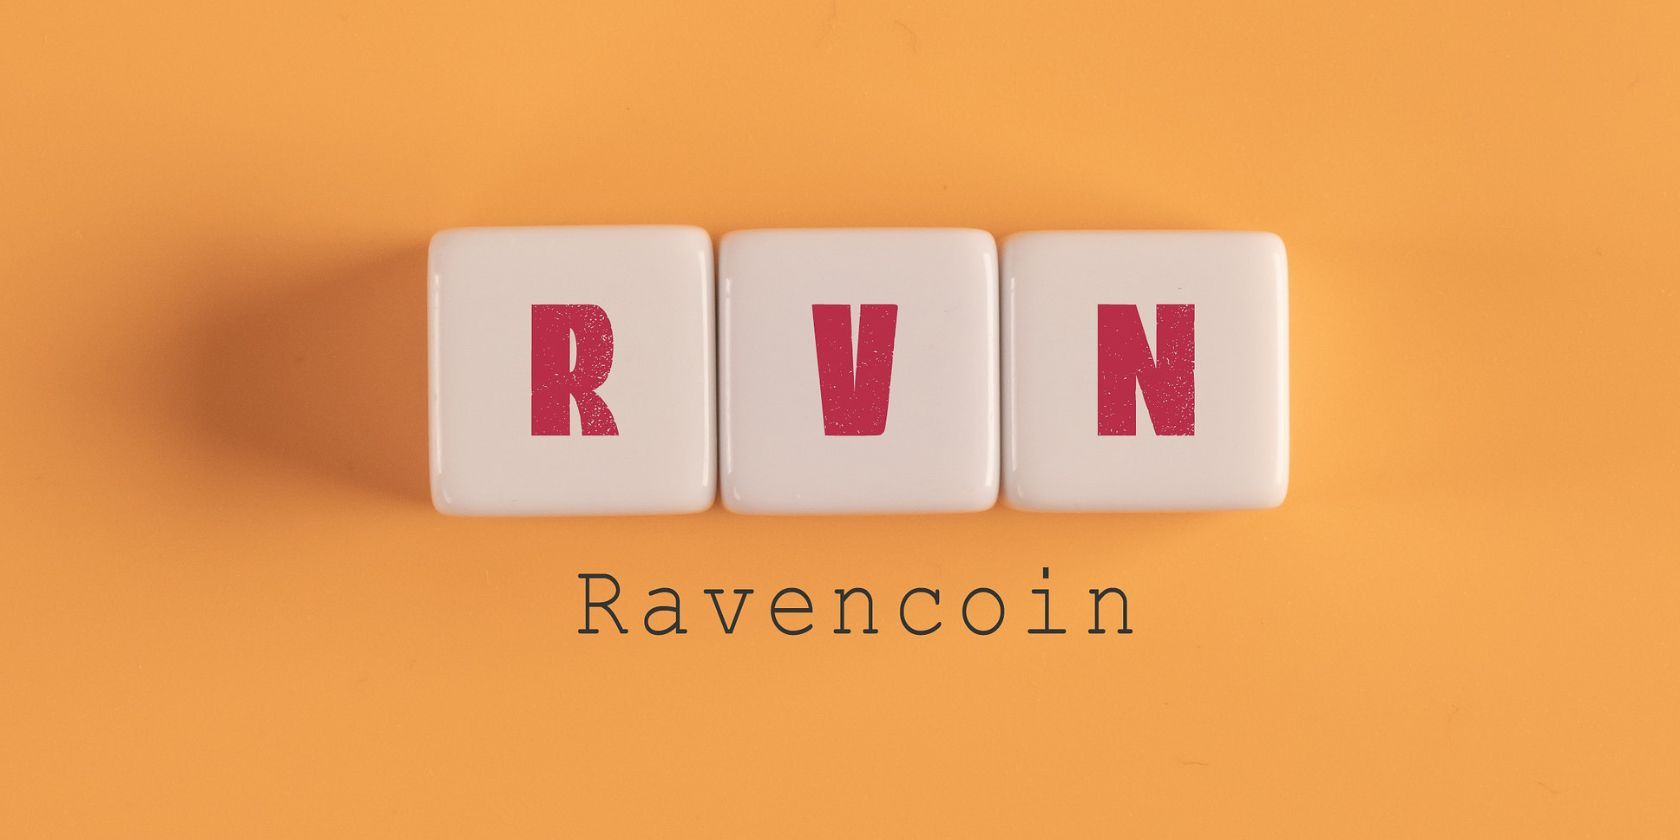 Abbreviated ravencoin using scrabble pieces